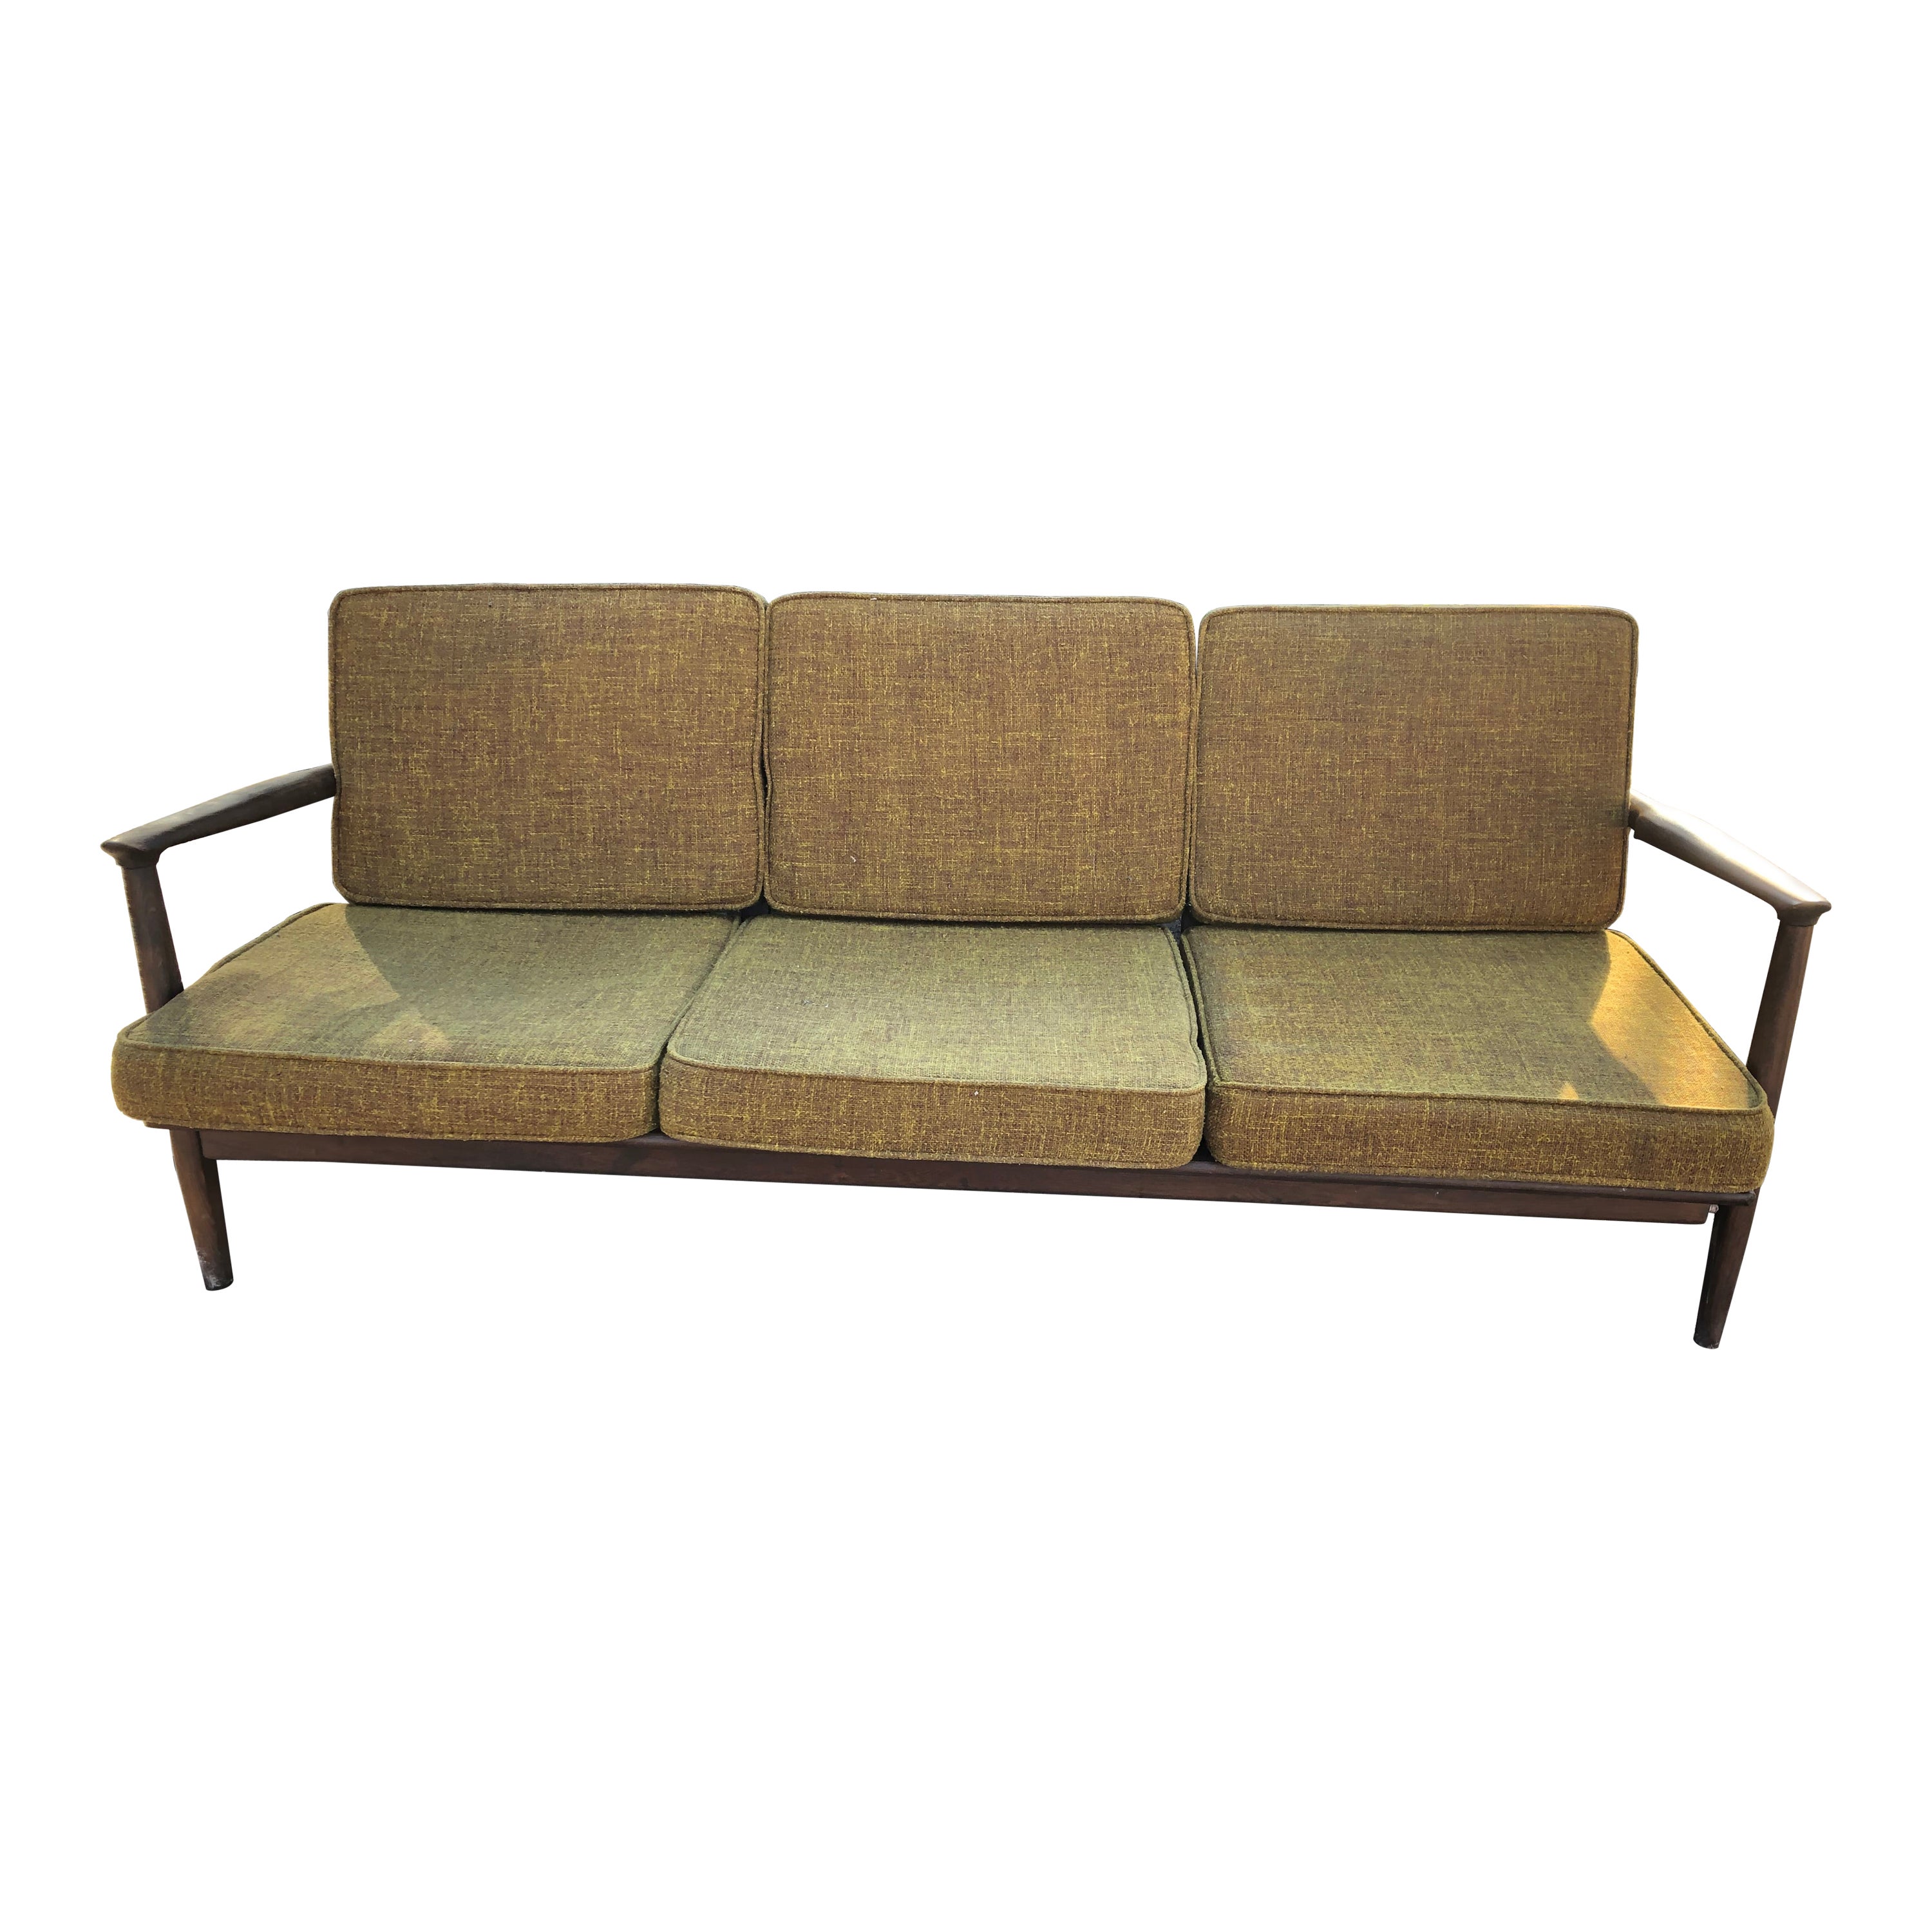 Retro Mid Century Modern Sleek Sofa